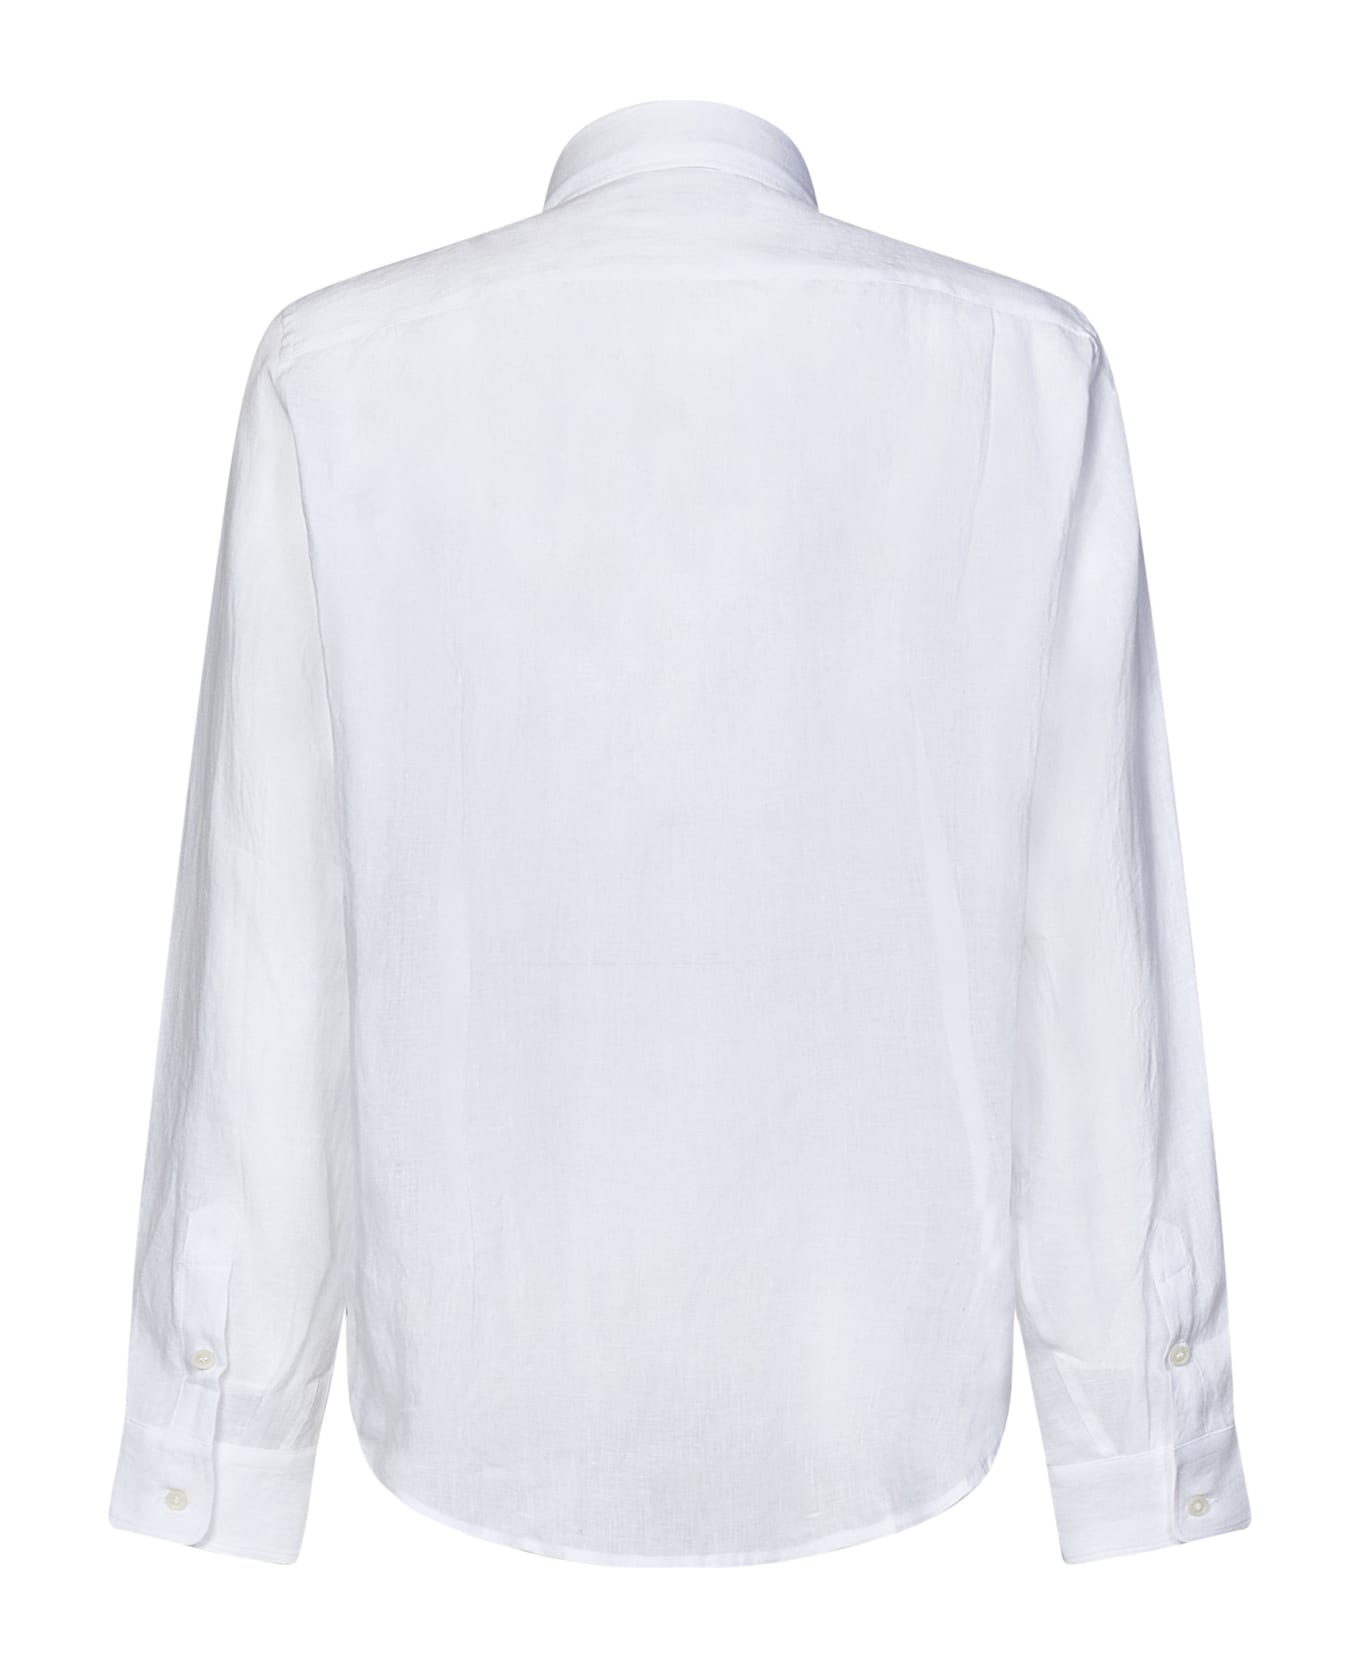 Sease Classic Bd Shirt - White